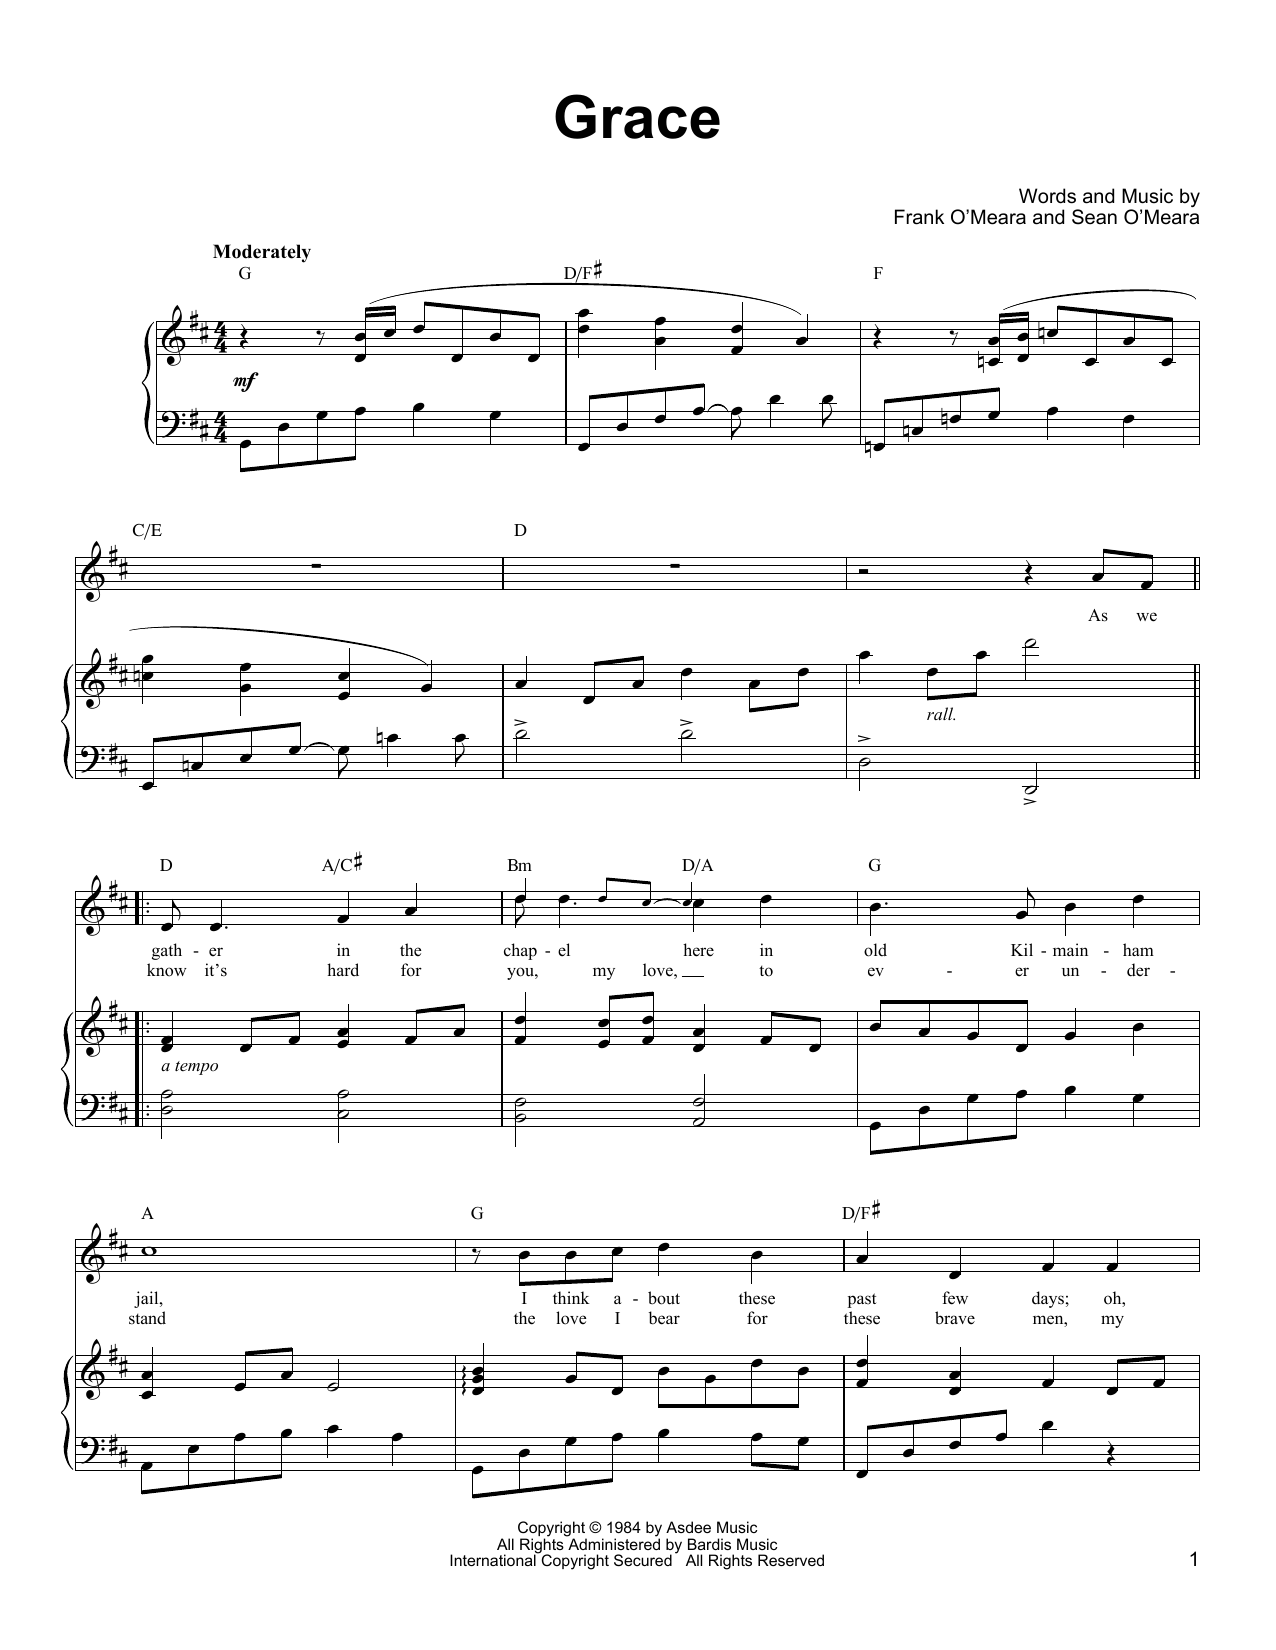 Ronan Tynan Grace Sheet Music Notes & Chords for Piano, Vocal & Guitar (Right-Hand Melody) - Download or Print PDF